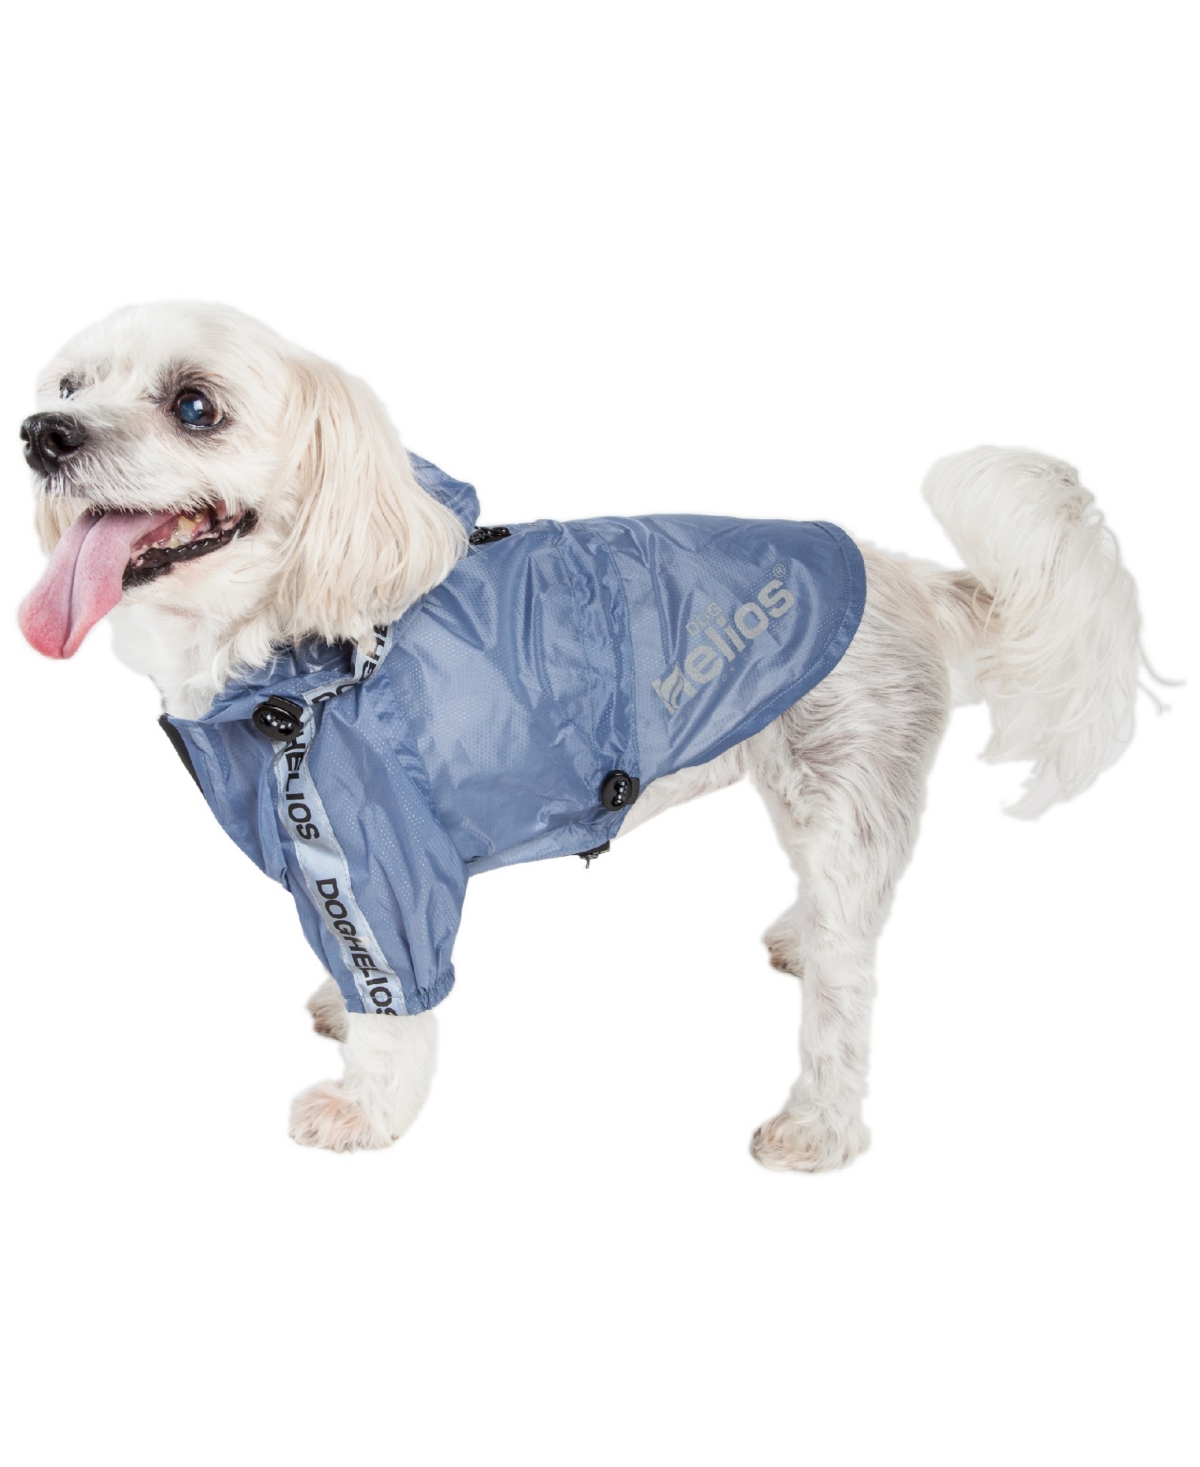 'Torrential Shield' Waterproof Multi Adjustable Pet Dog Jacket - Pink